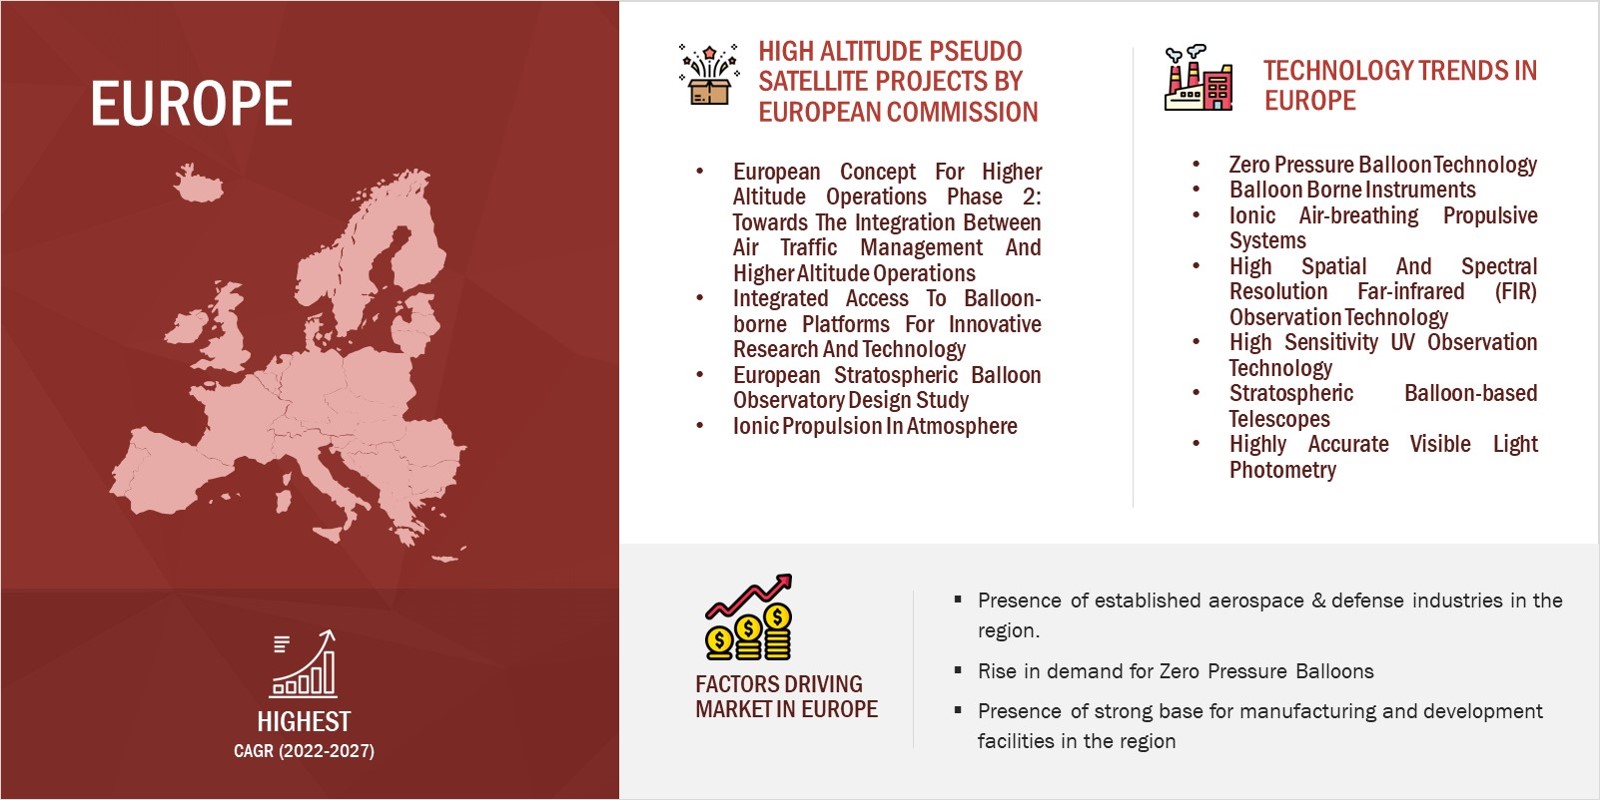 High Altitude Pseudo Satellite Market by Region